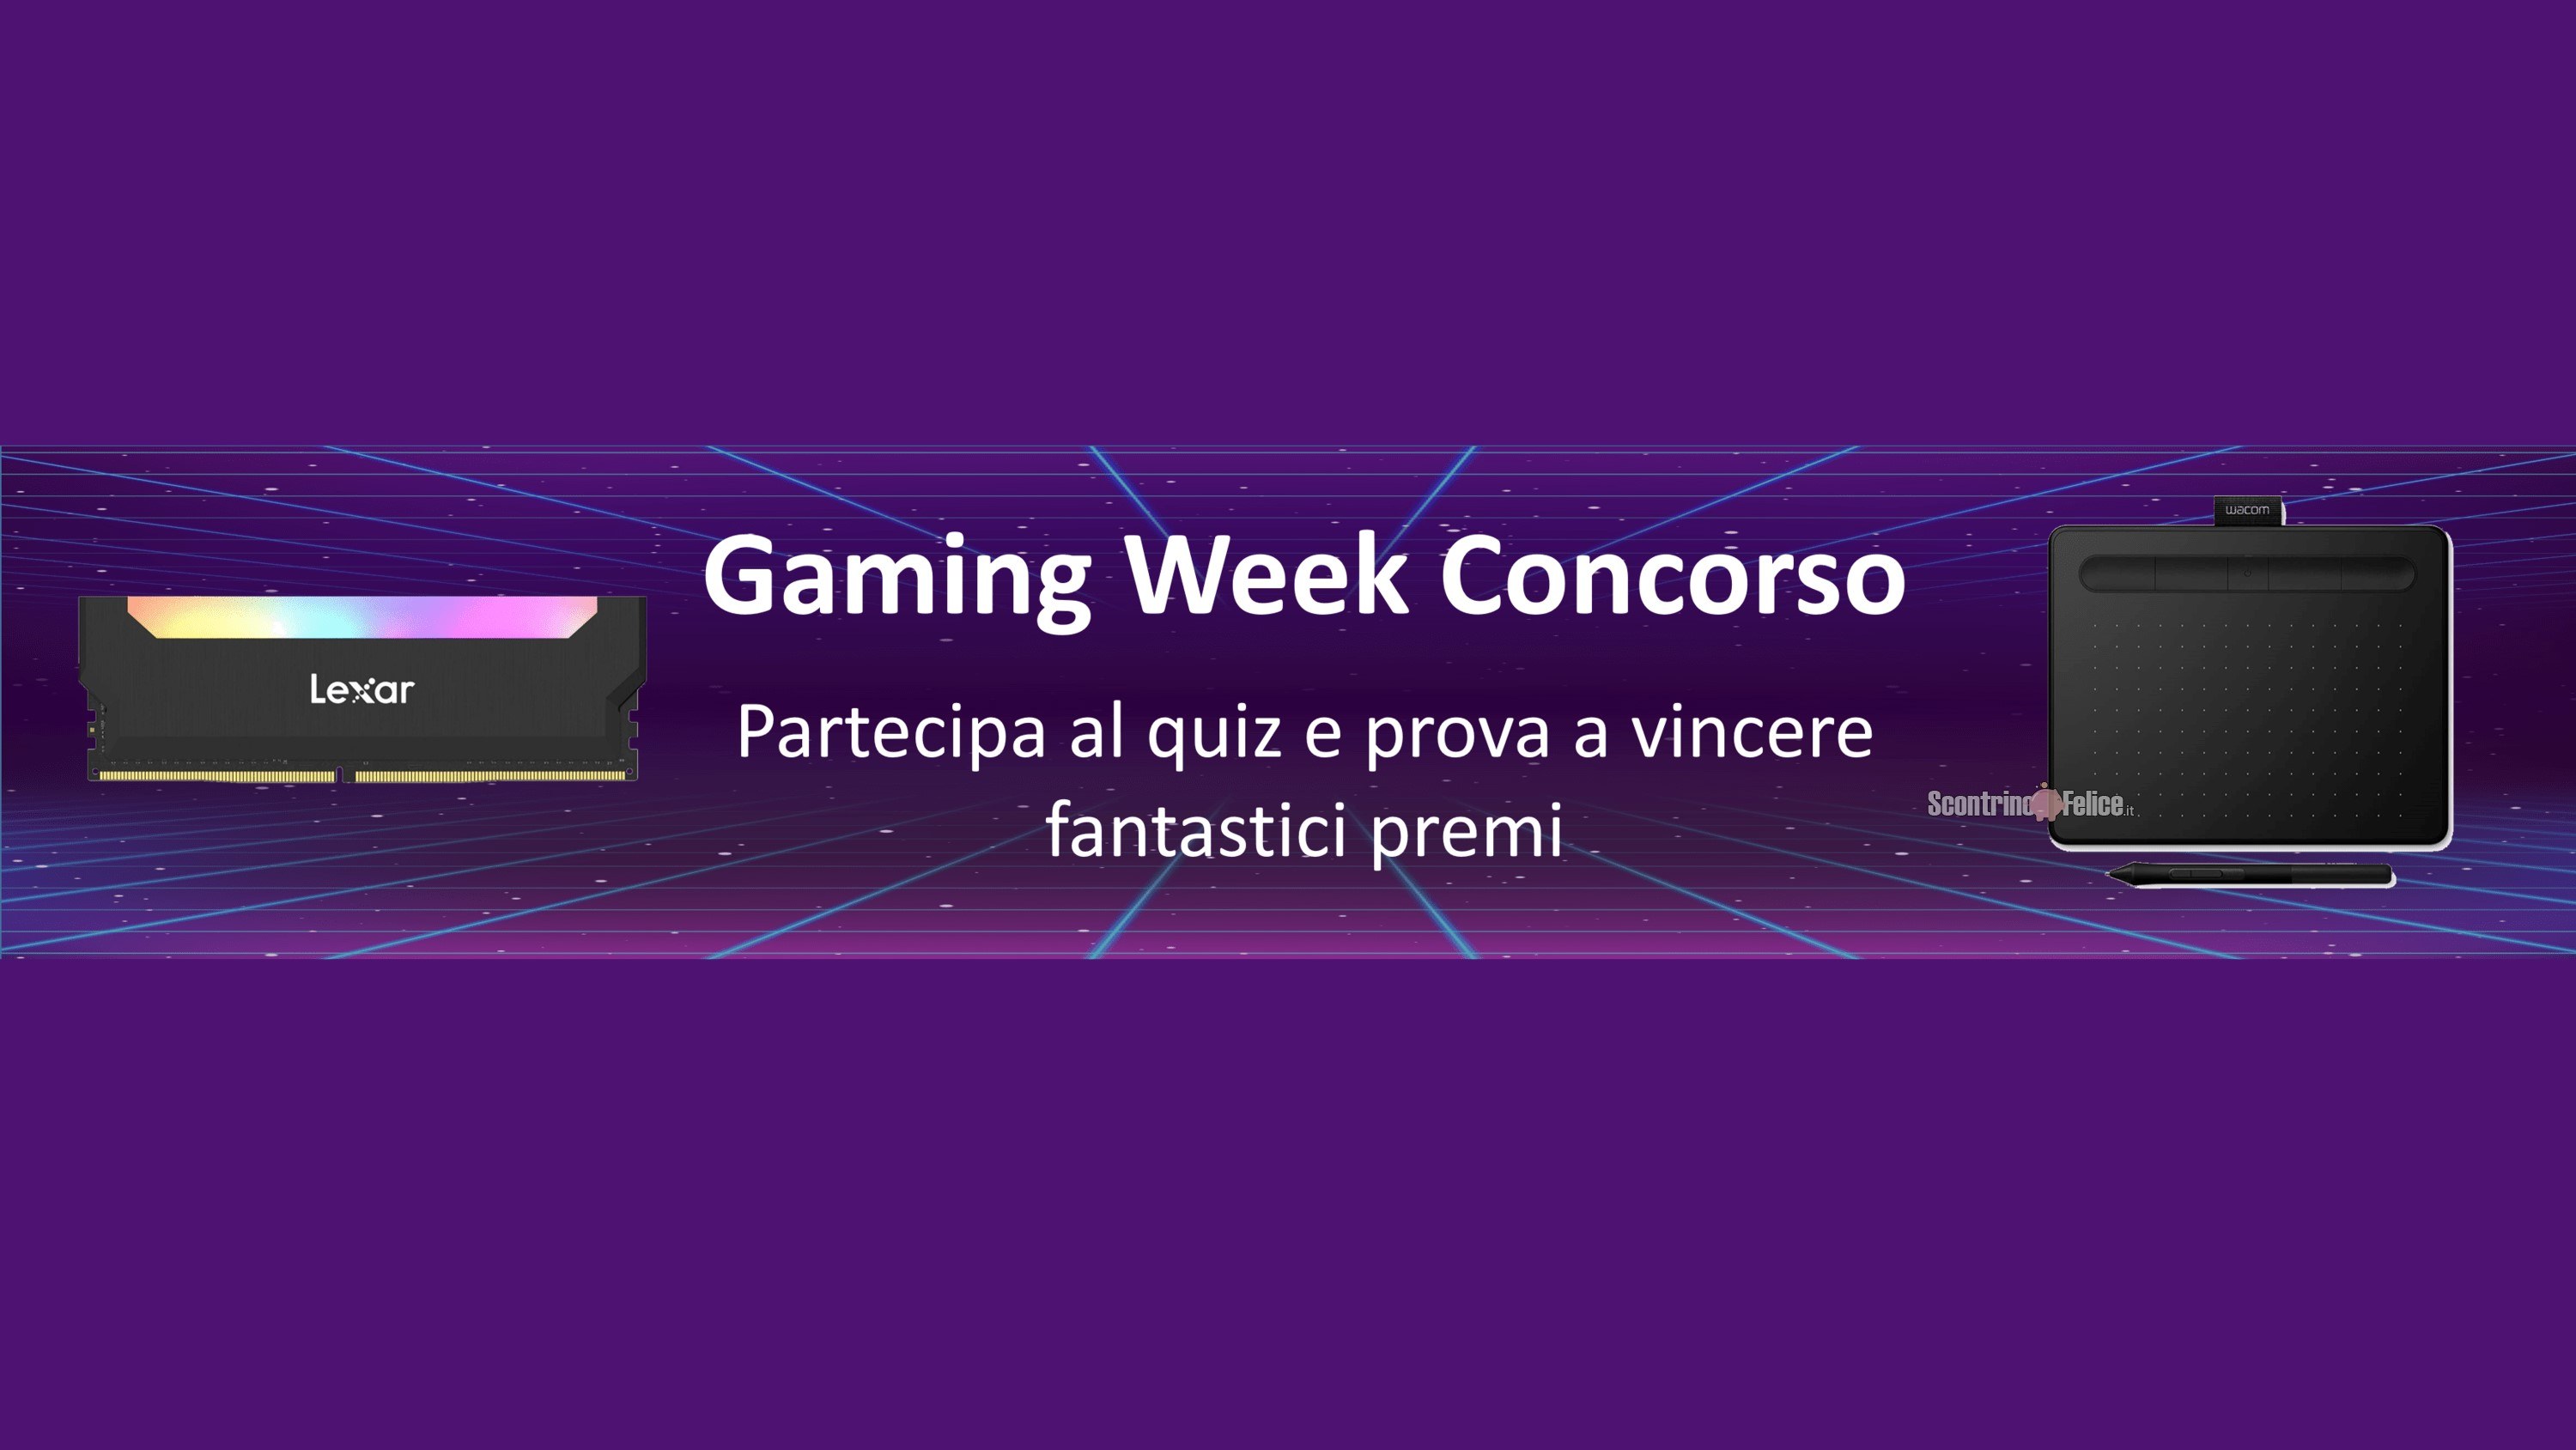 Concorso gratuito Amazon Gaming Week: vinci premi tecnologici!